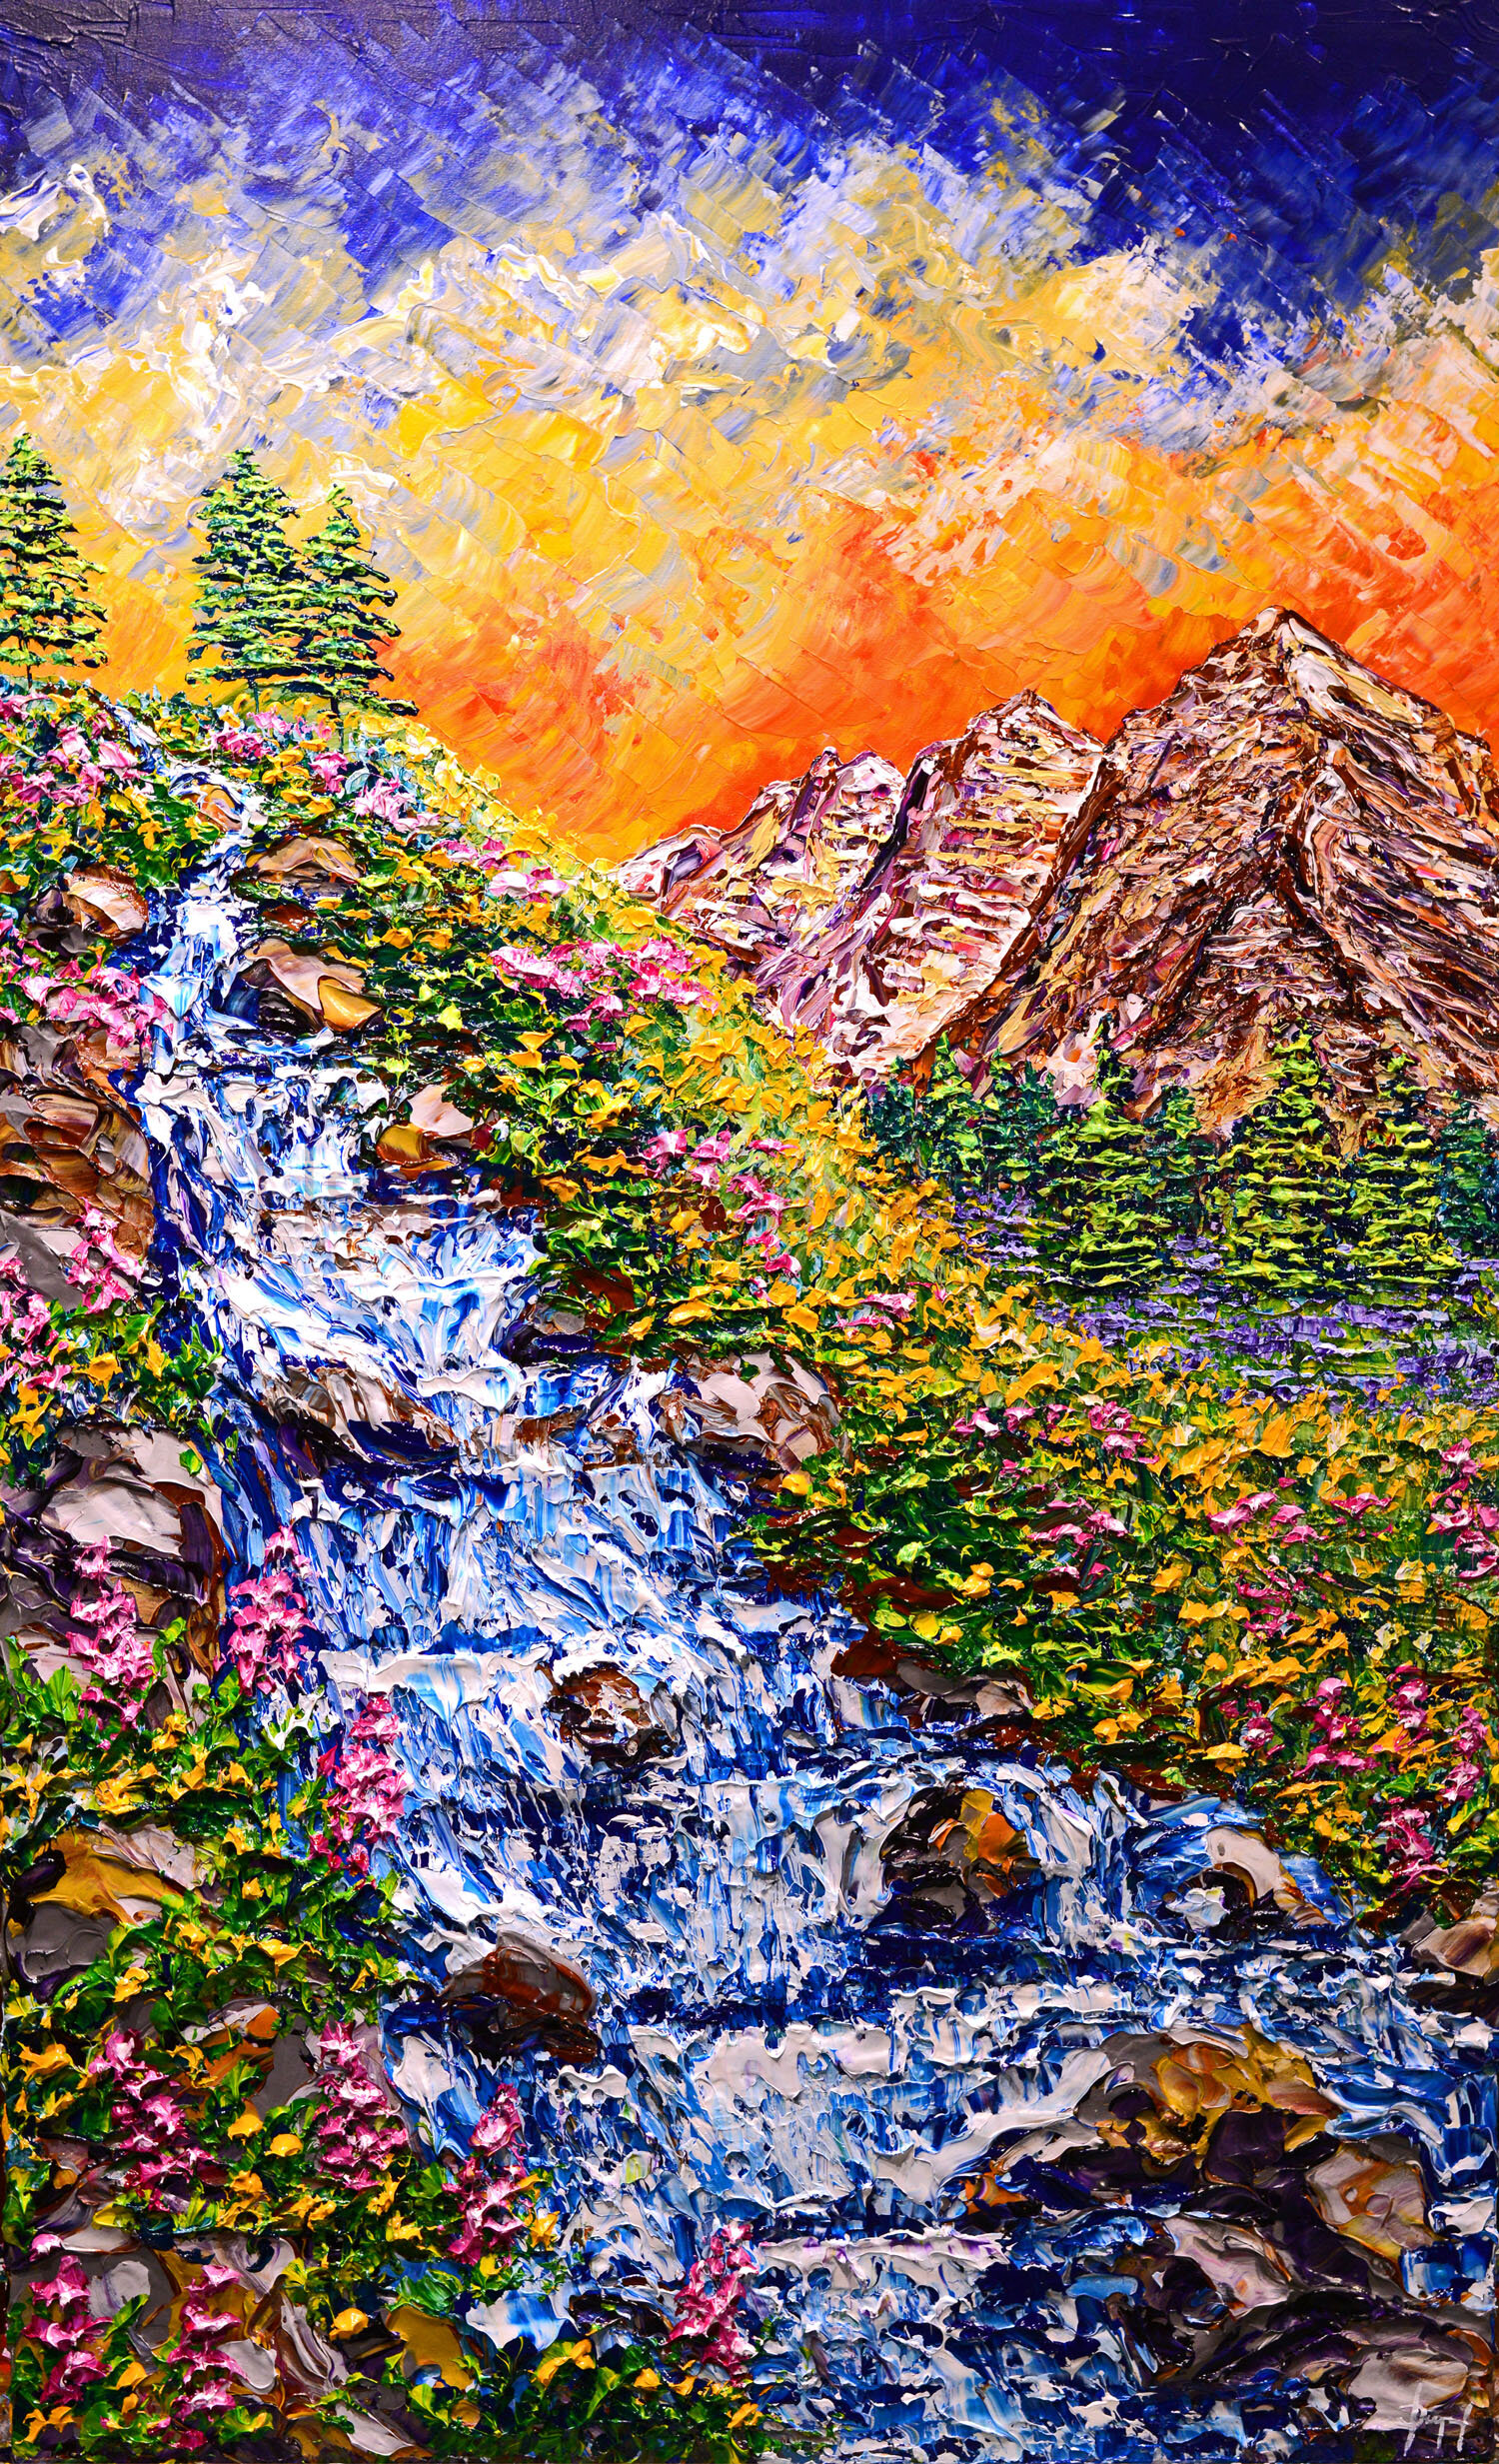 Waterfall of Bright Flowers 60x36